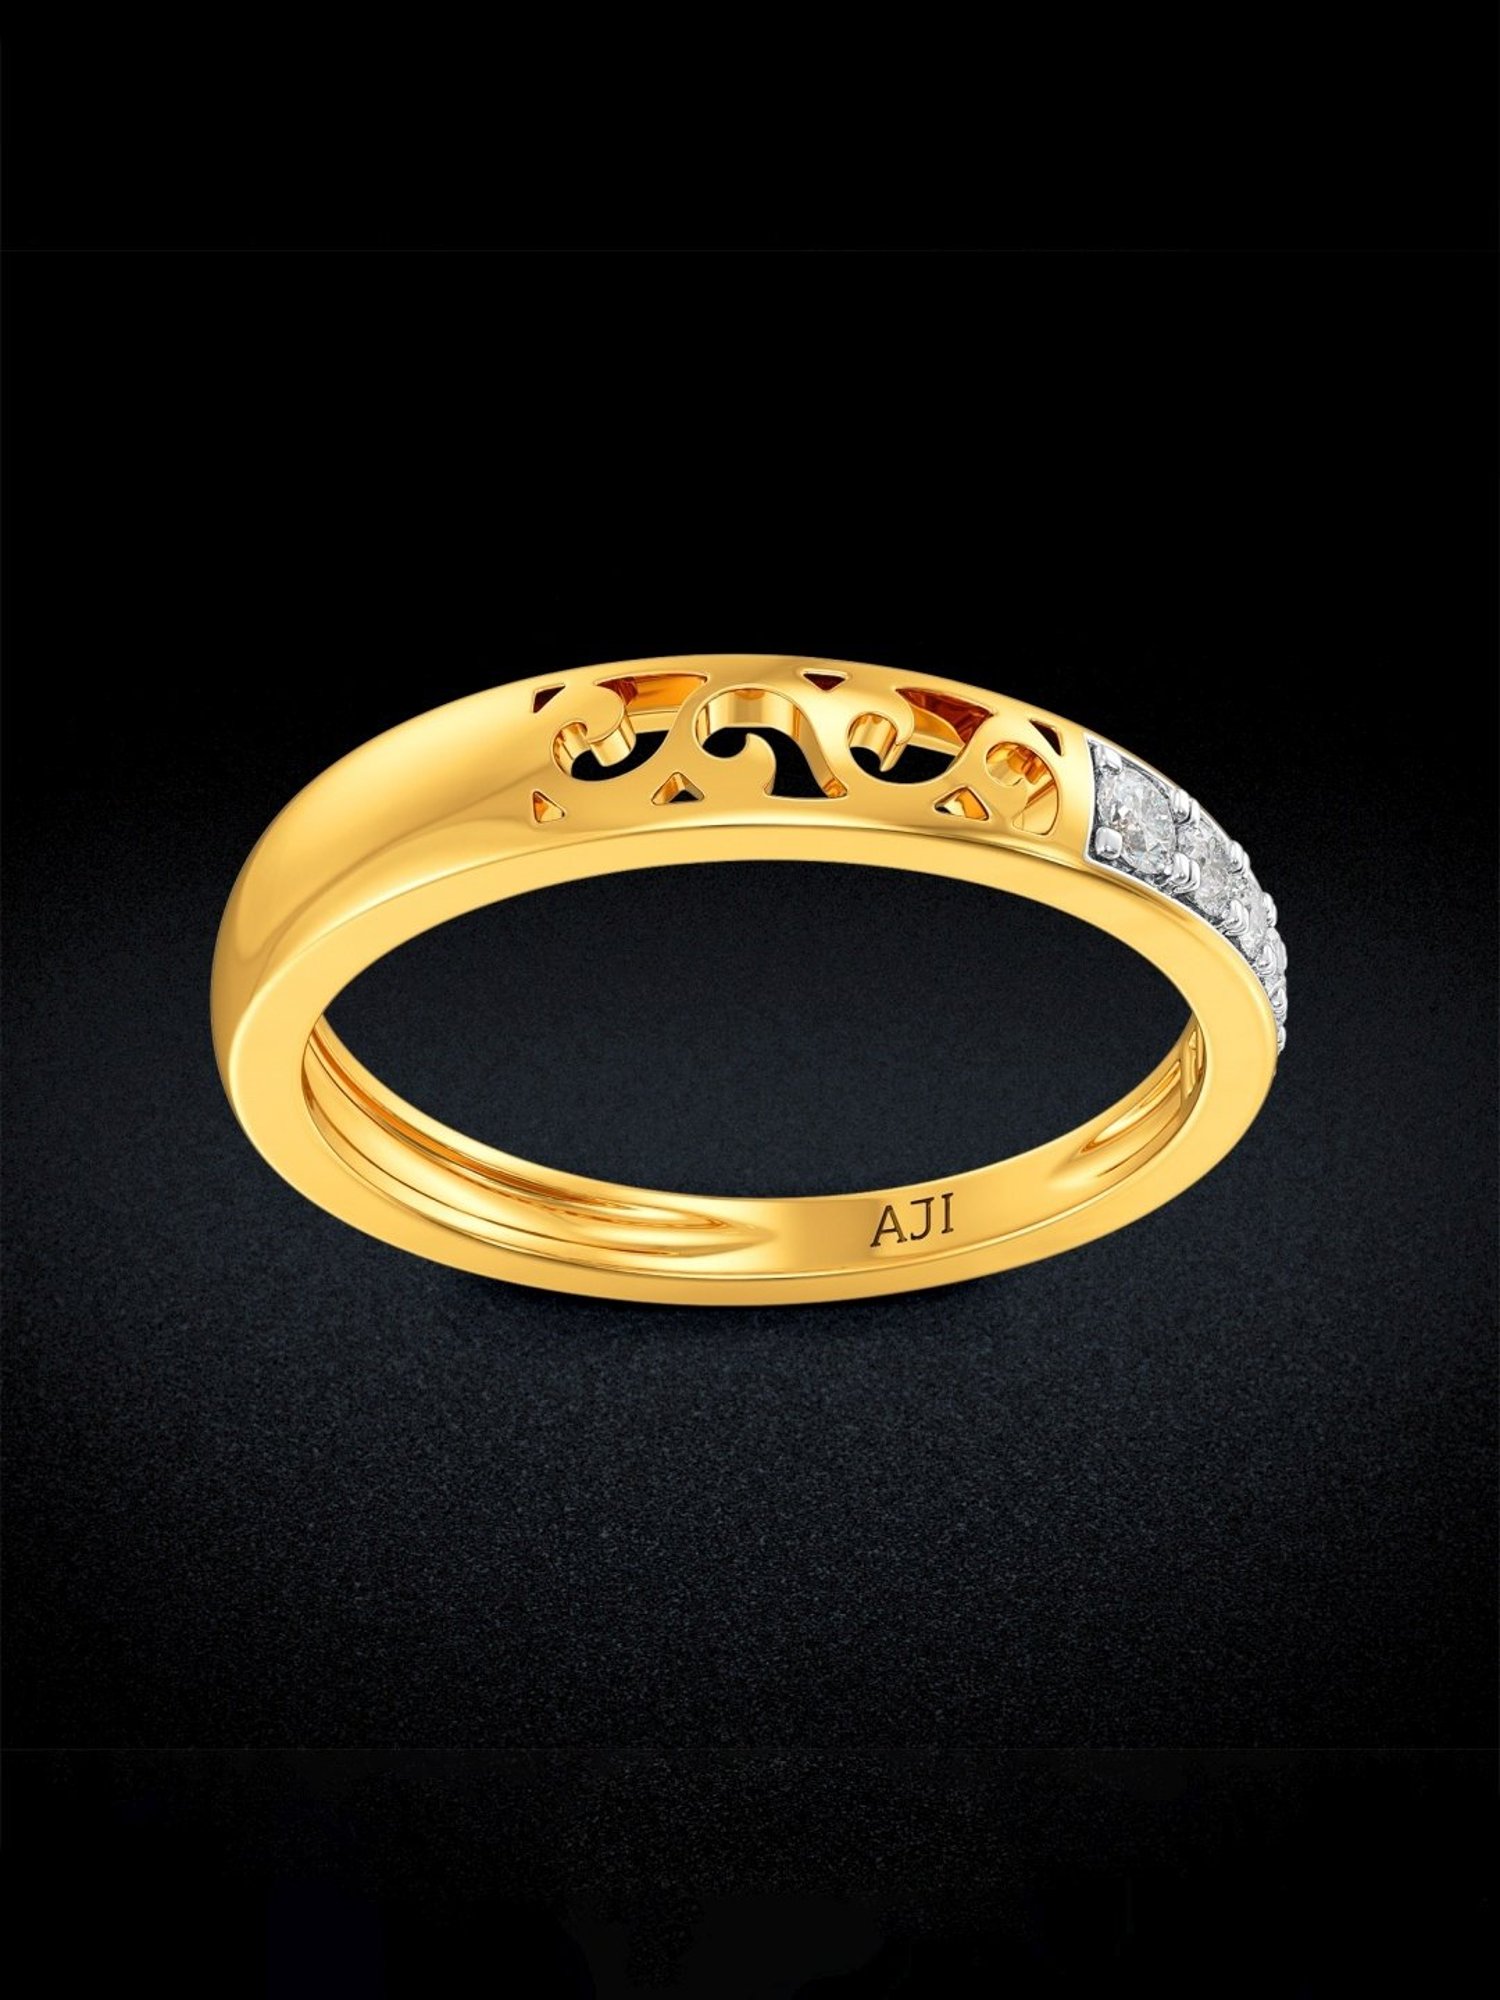 Buy Joyalukkas Unique Gold eternity Ring at Amazon.in